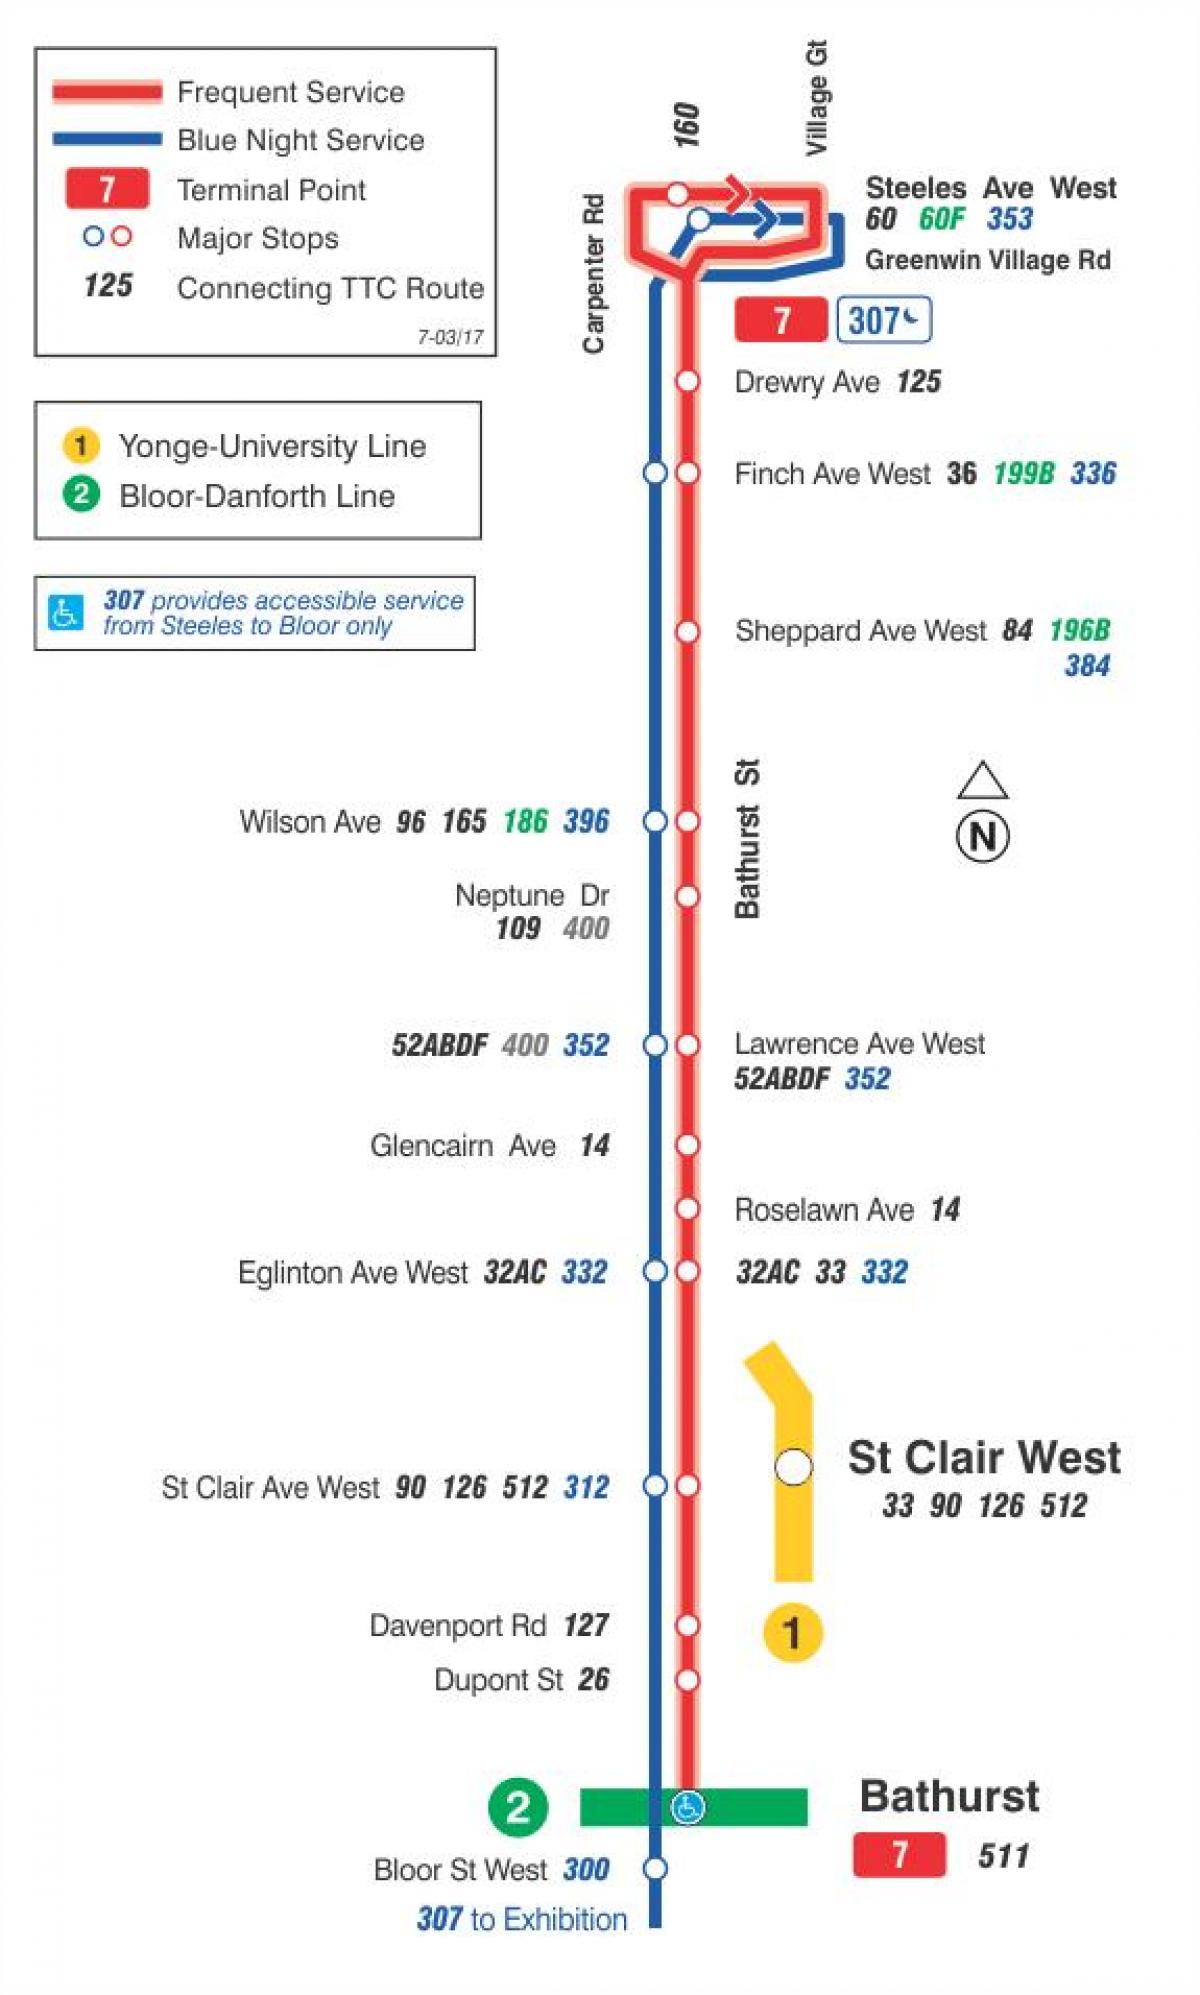 Карта ТТК 7 Батерст автобусного маршрута Торонто